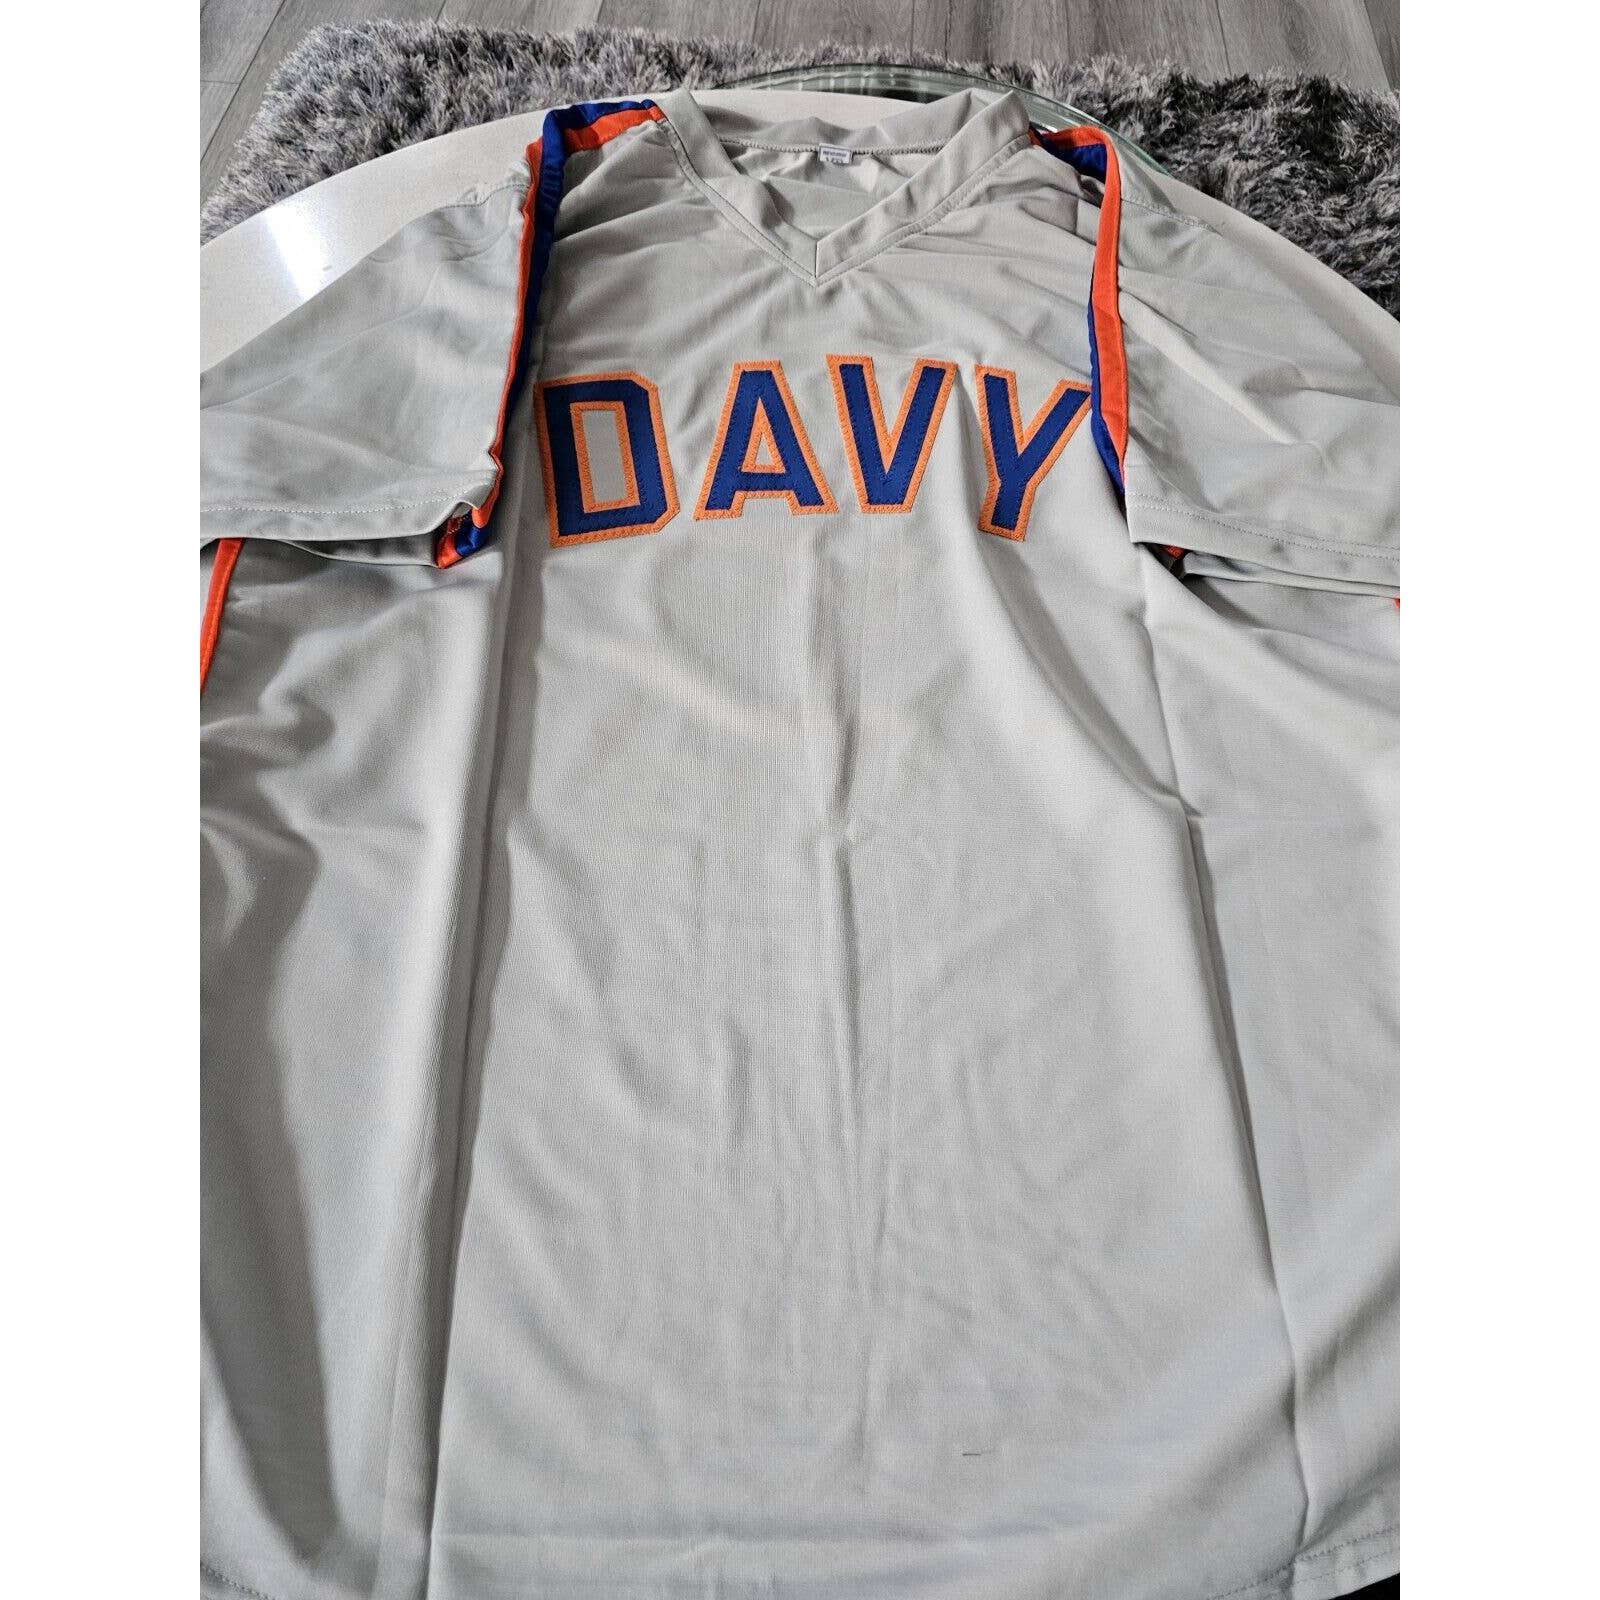 Davey Johnson Autographed/Signed Jersey PSA/DNA COA New York Mets NY - TreasuresEvolved